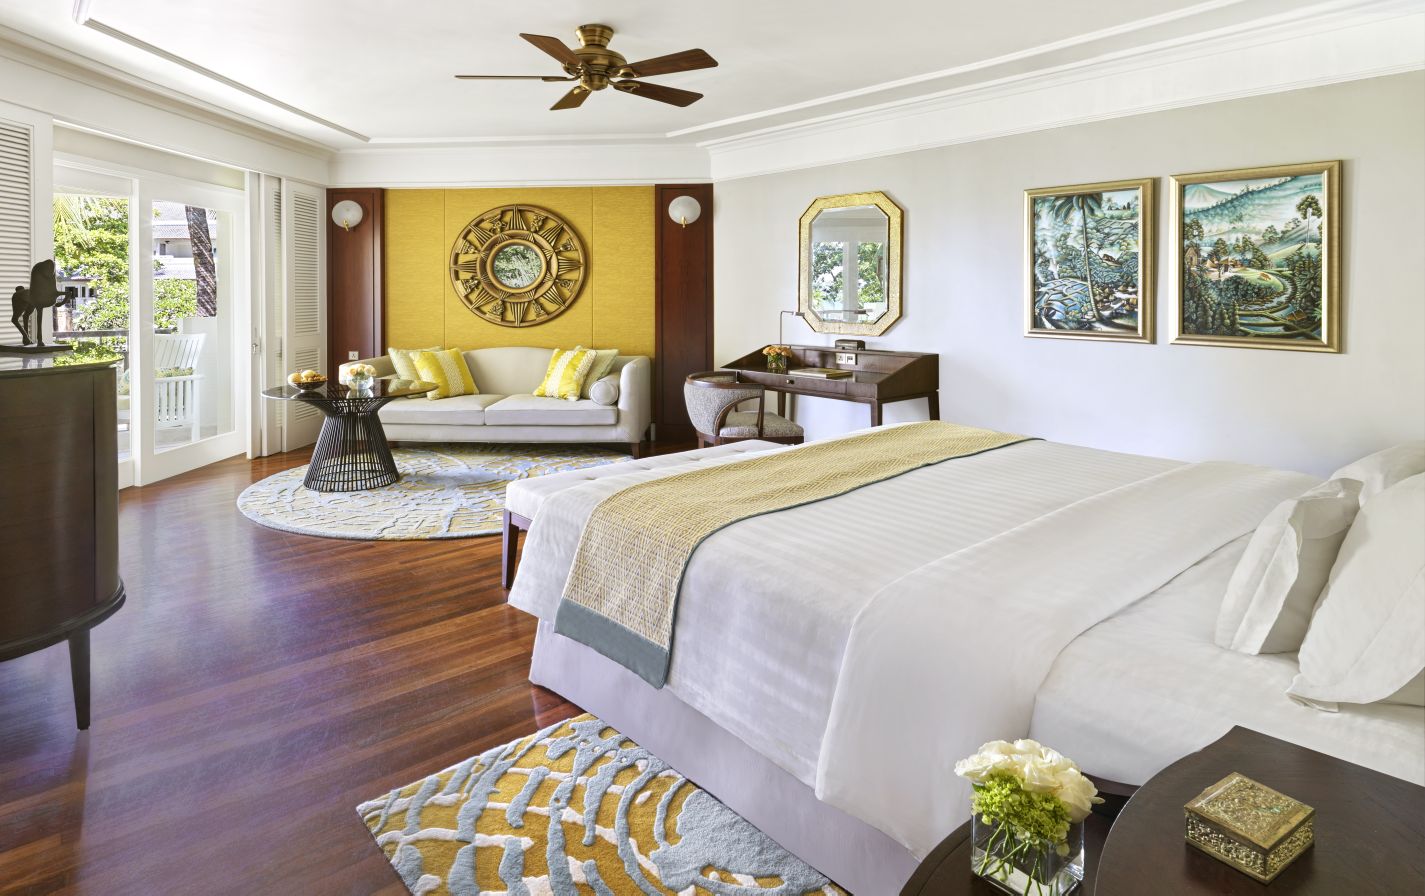 Introducing New Invigorating Premium Singaraja Spa Room  at InterContinental Bali Resort